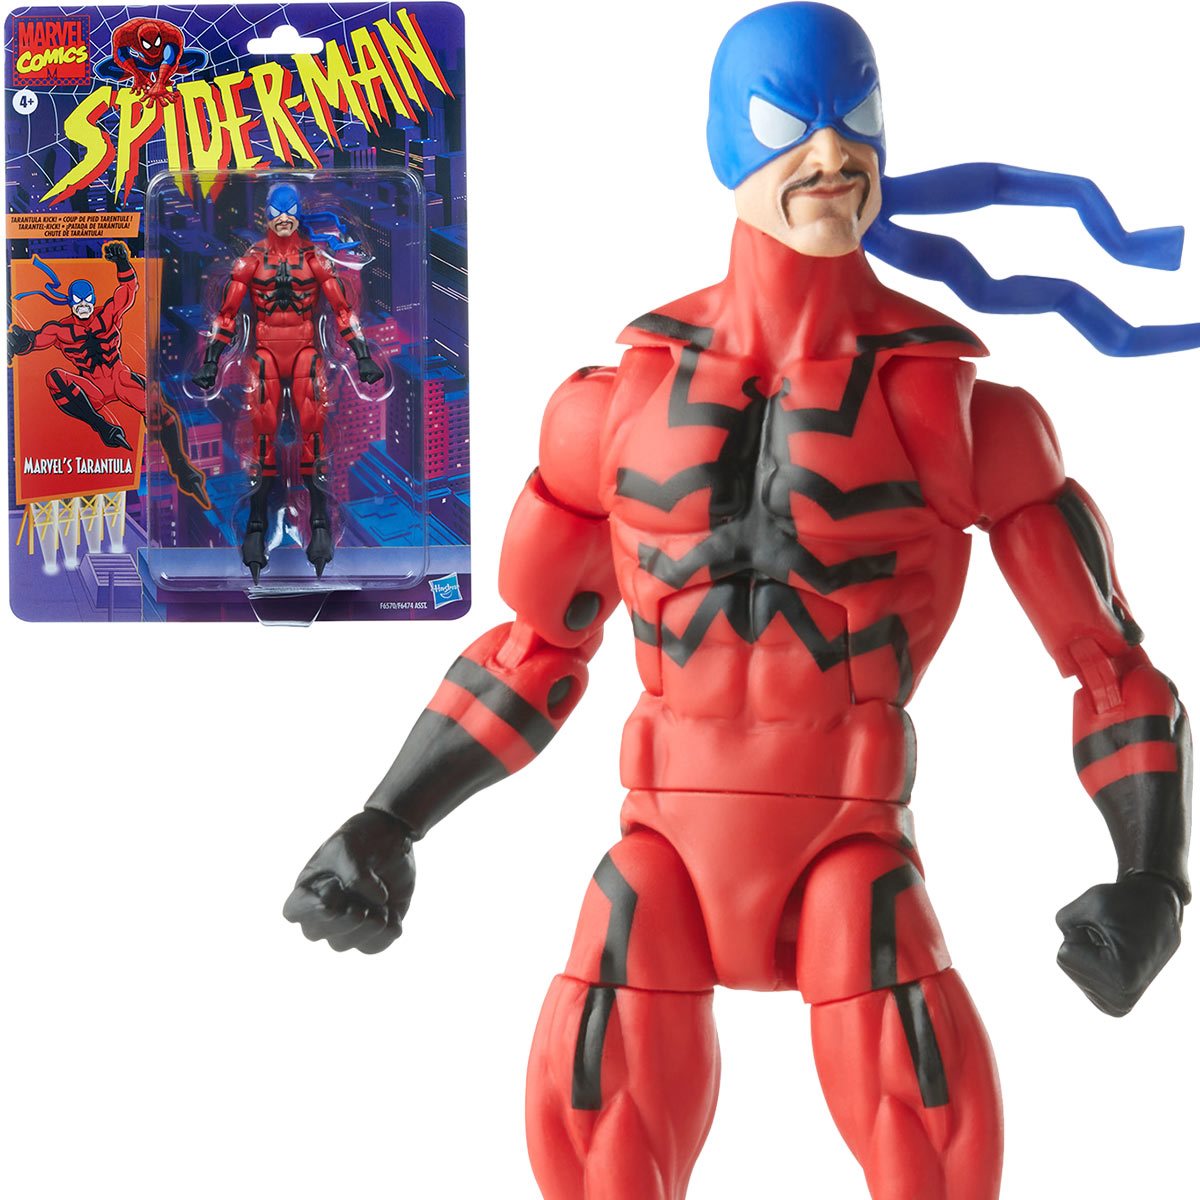 Marvel Legends Spider-Man - Marvel's Tarantula Action Figure Toy